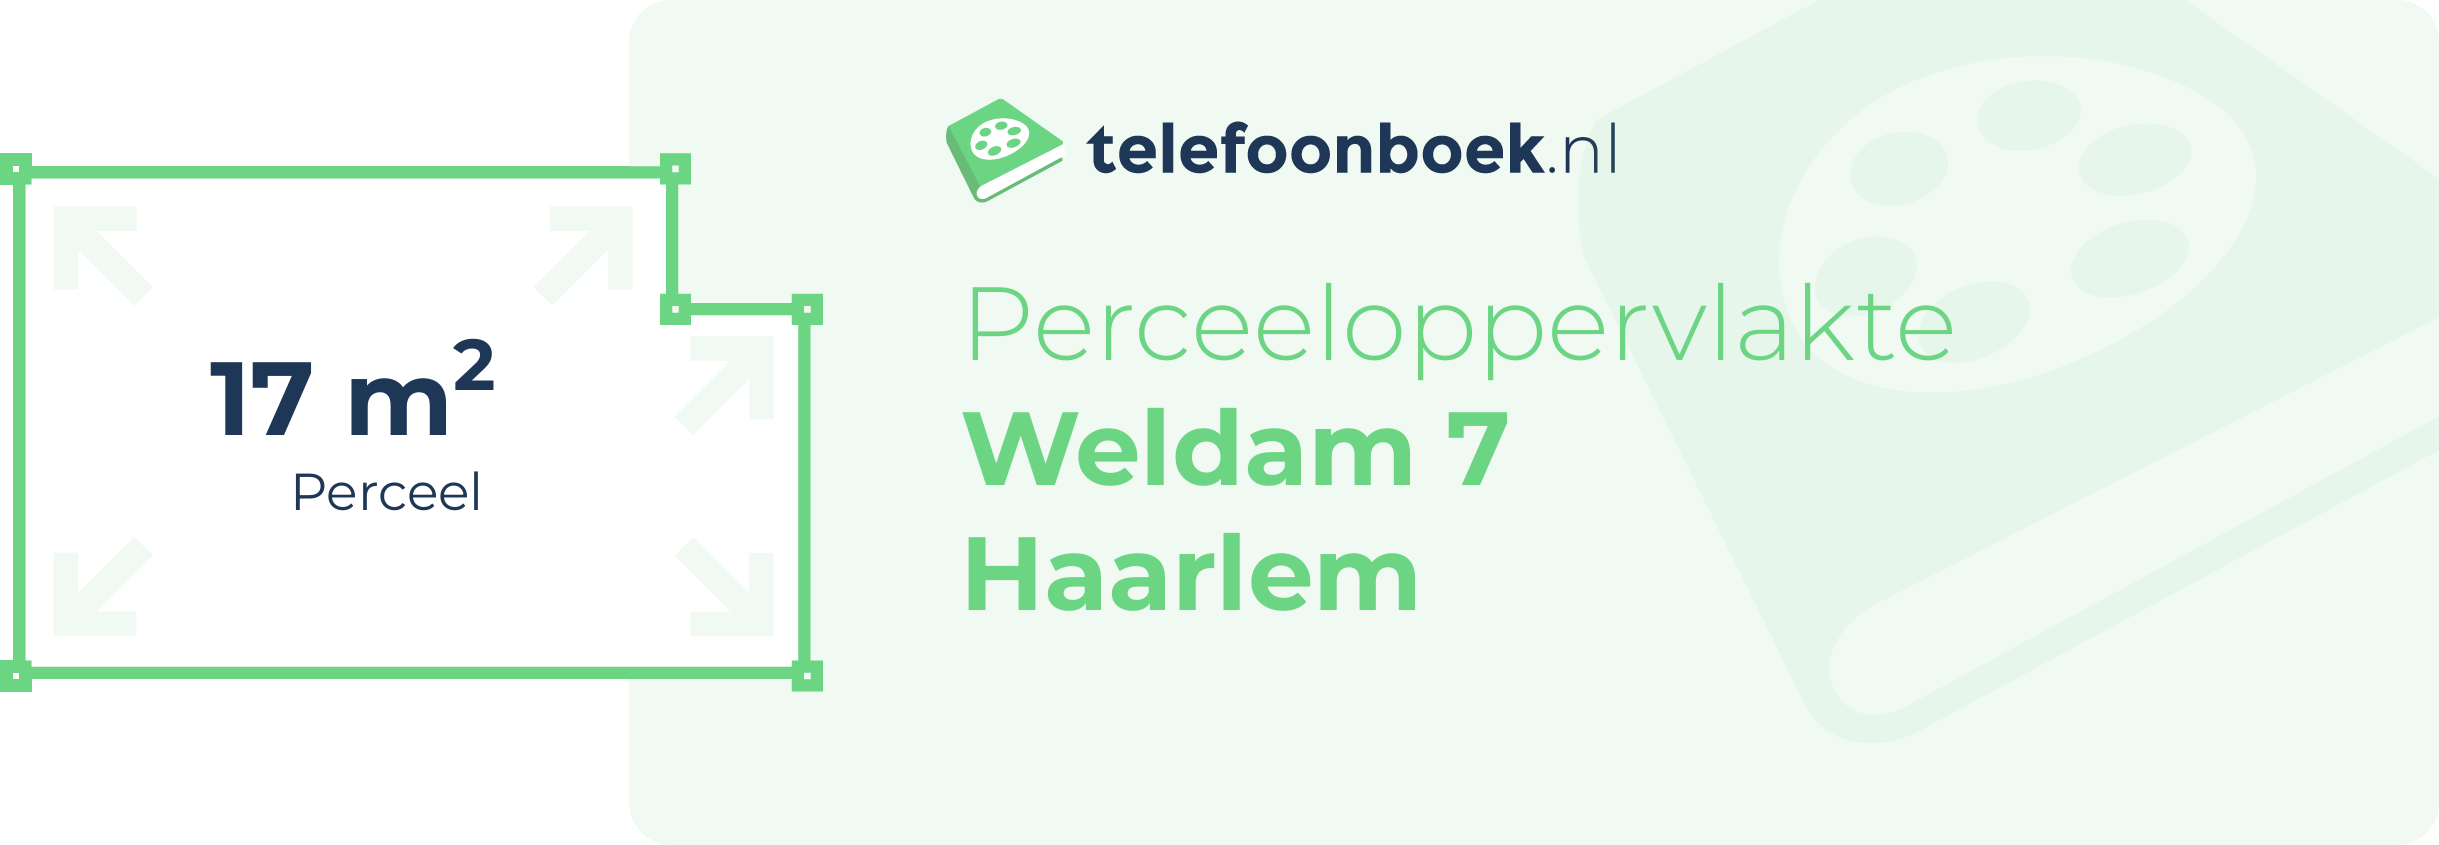 Perceeloppervlakte Weldam 7 Haarlem